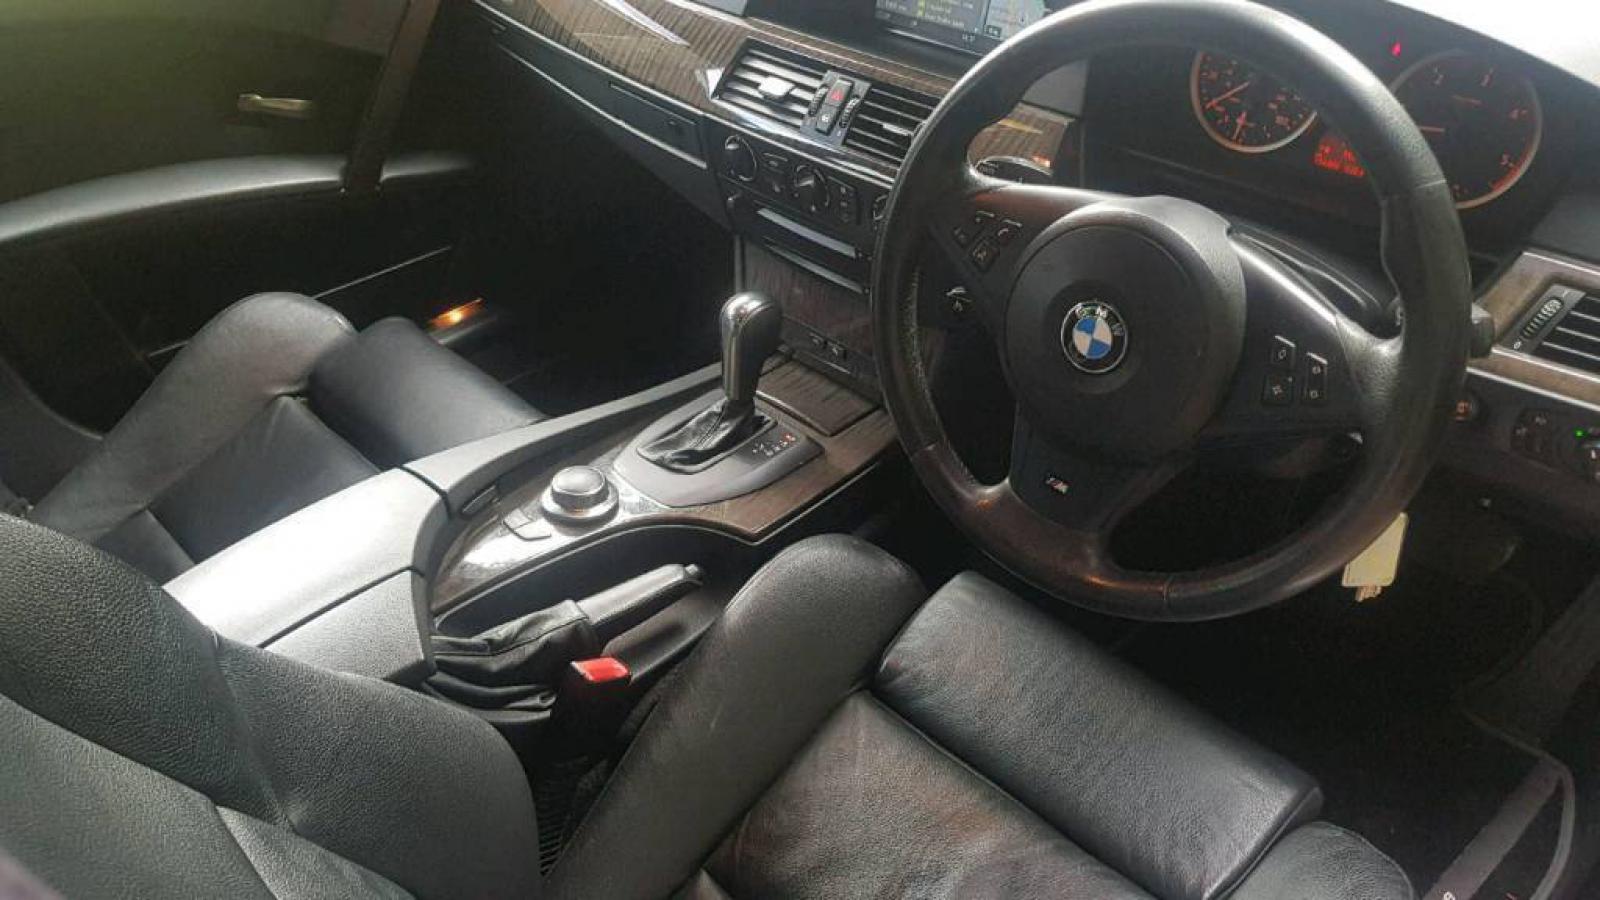  BMW 5 Series